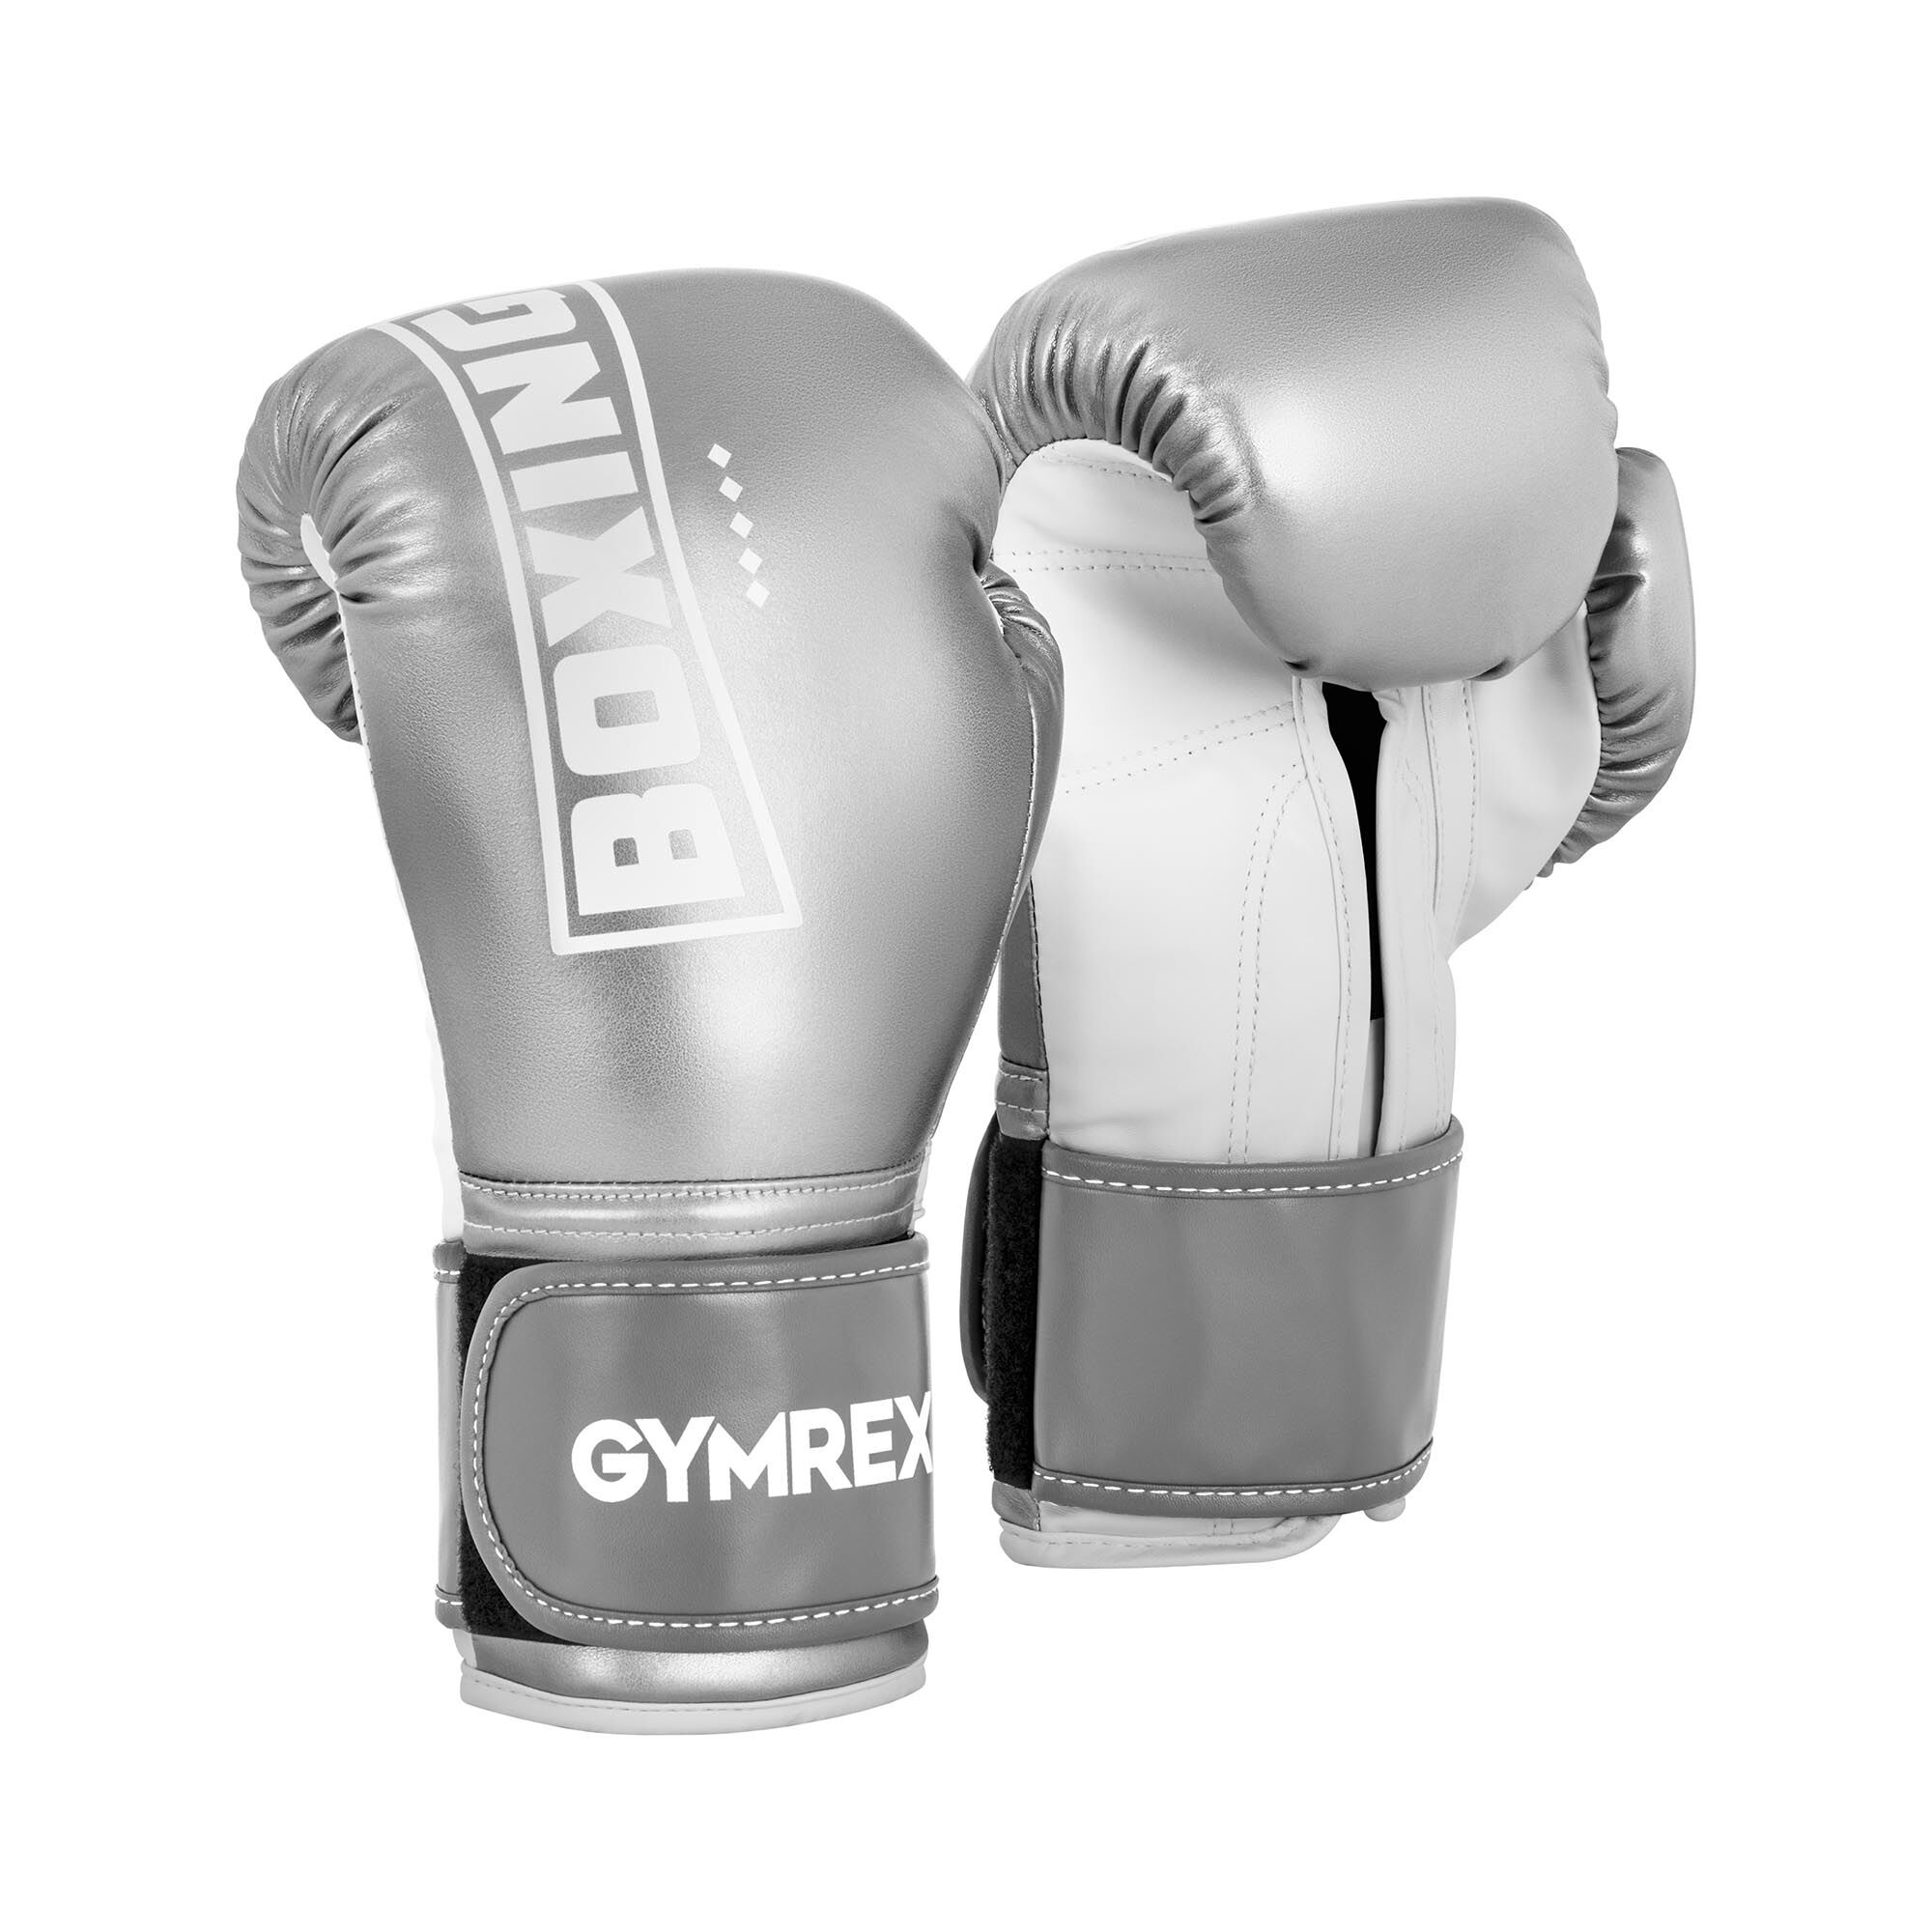 Gymrex Boxing Gloves - 12 oz - metallic silver and white GR-BG 12BP